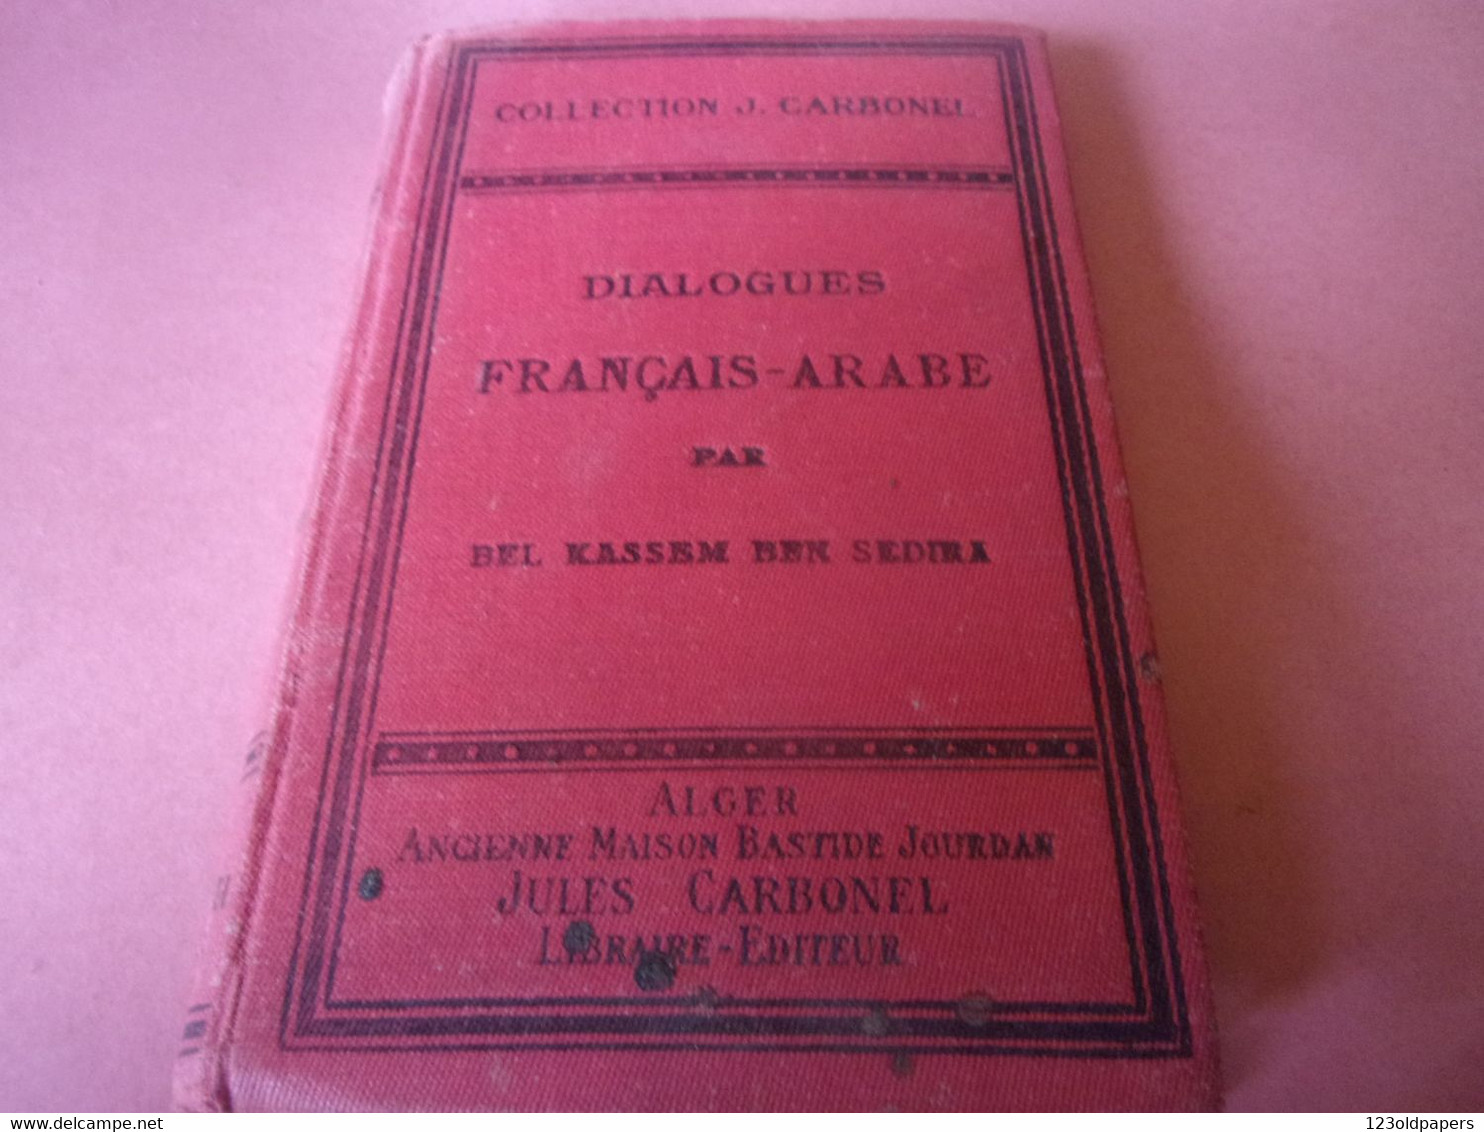 ♥️ 1905 DIALOGUES Français-arabe Par Ben Sedira Bel Kassem. Jourdan, Alger COLLECTION CARBONEL ALGERIE - 1901-1940